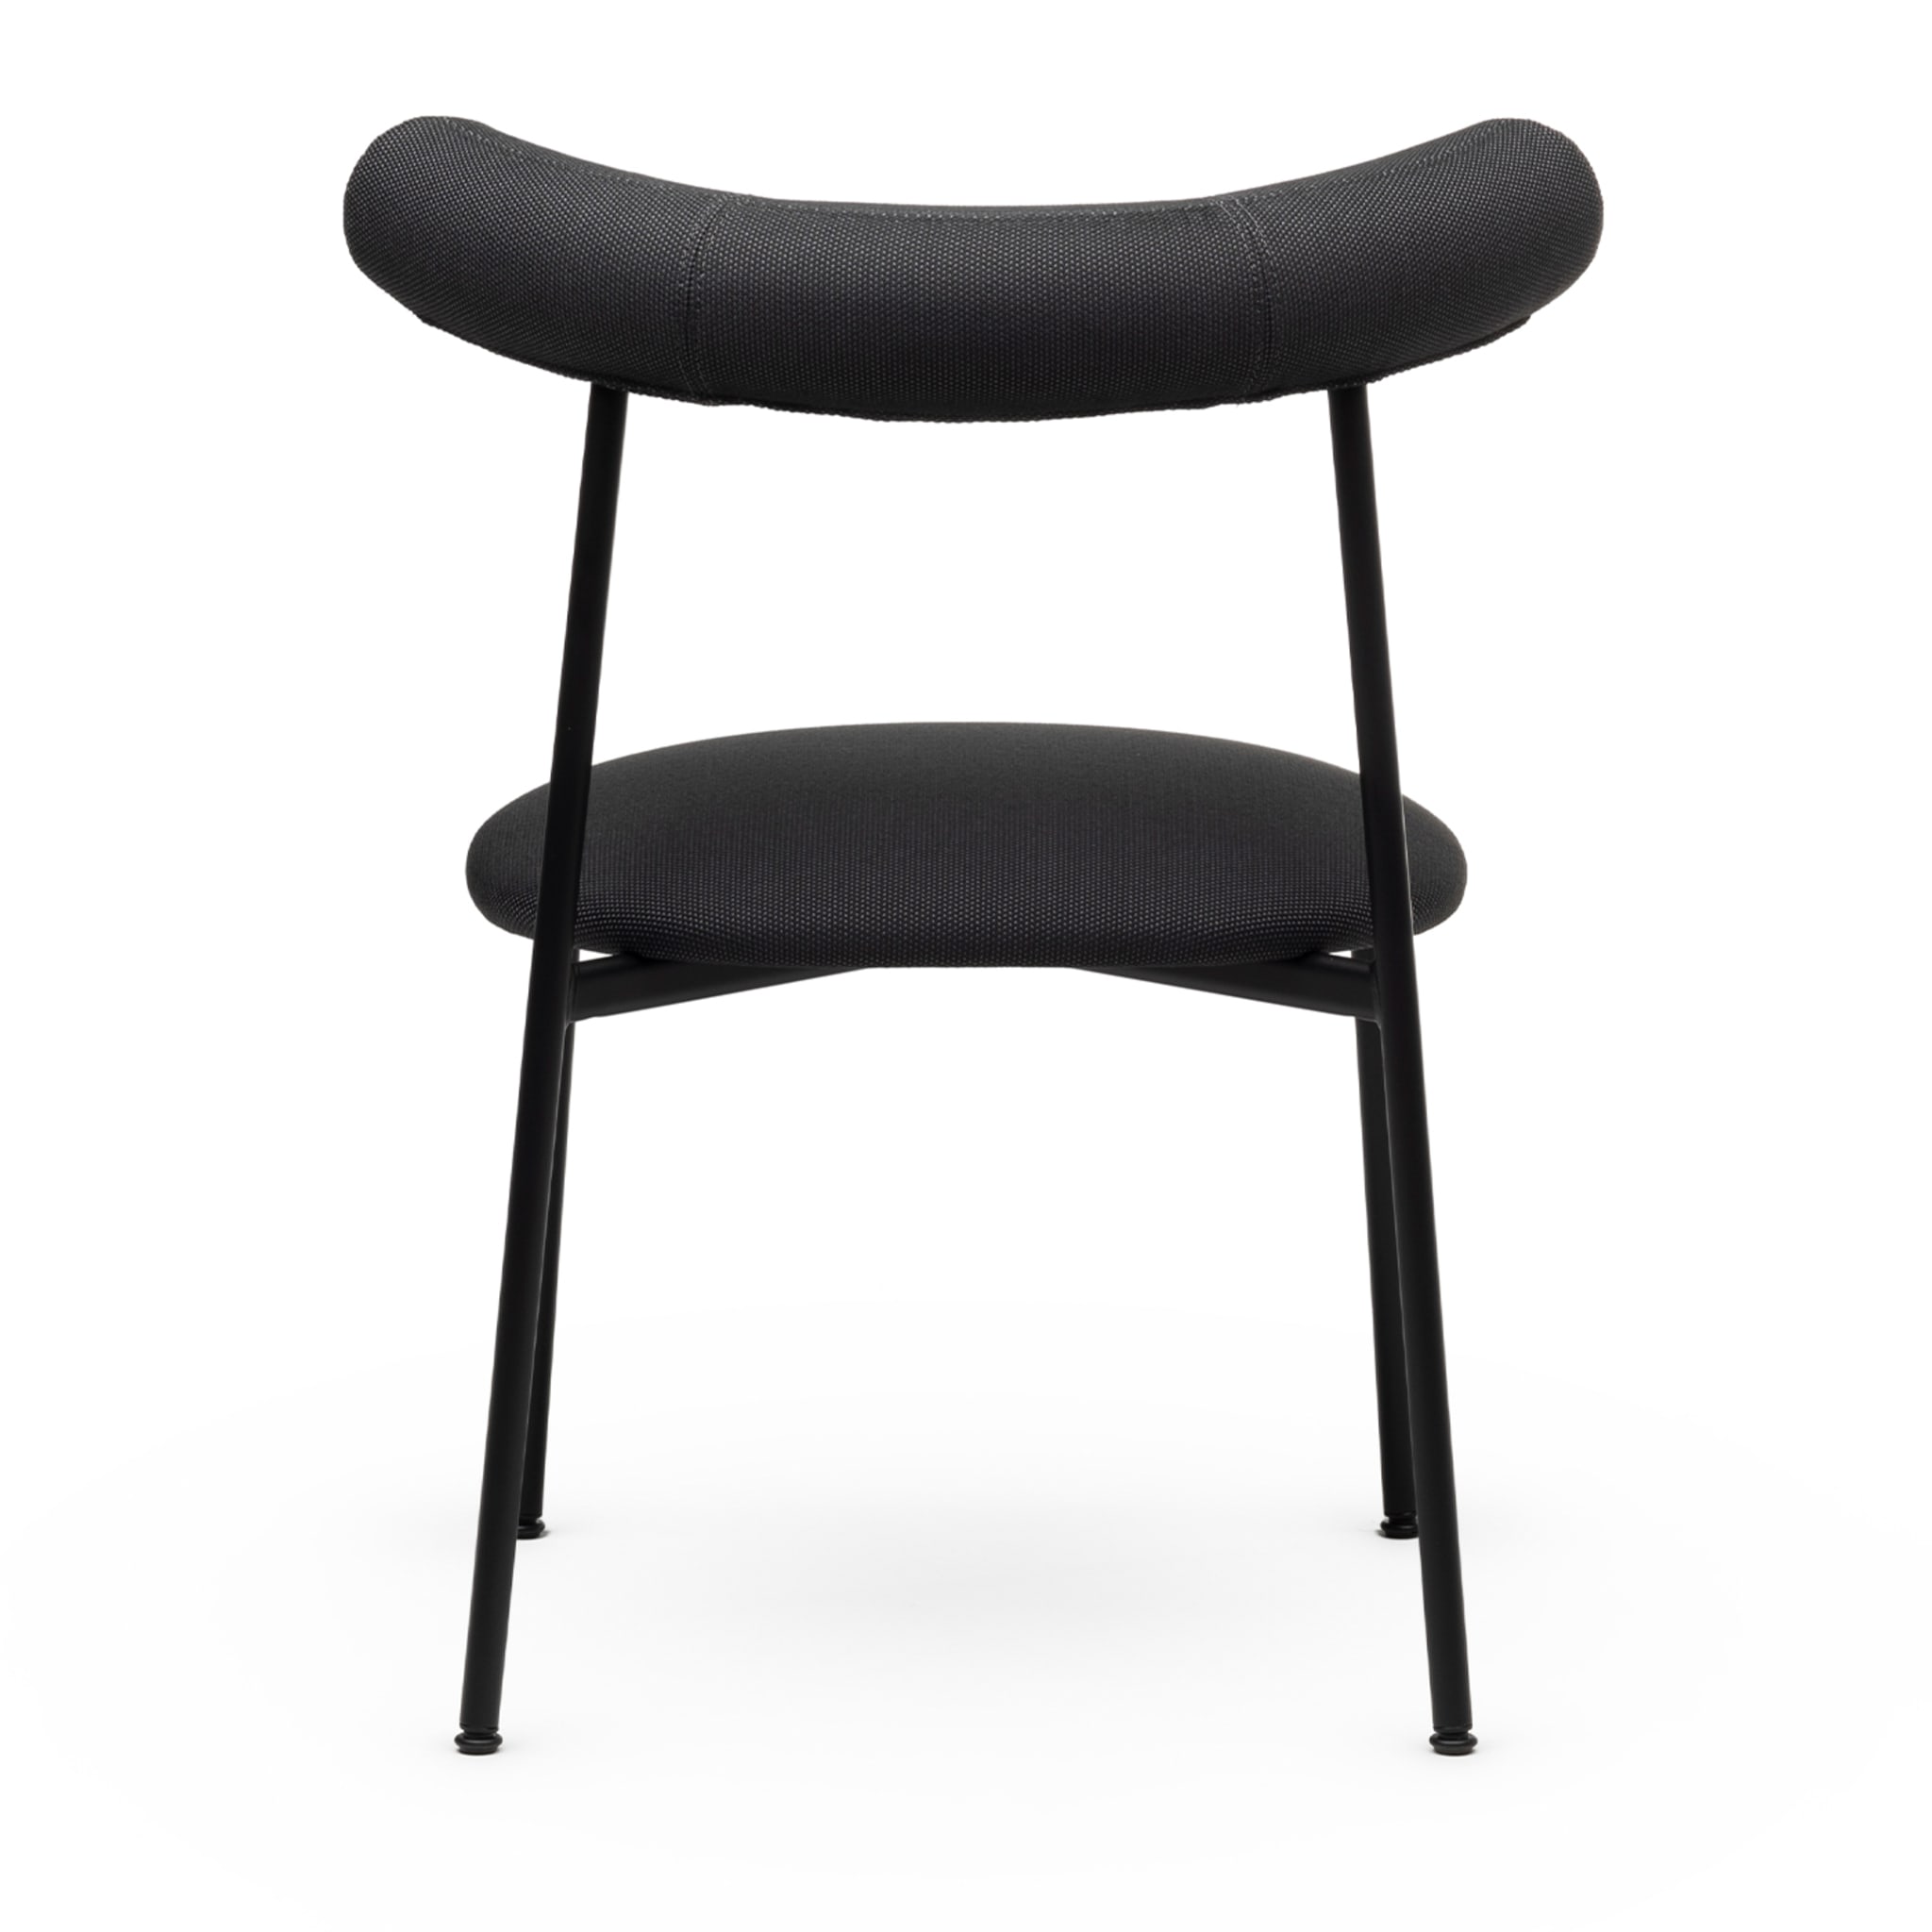 Pampa S Black Chair by Studio Pastina - Alternative view 1